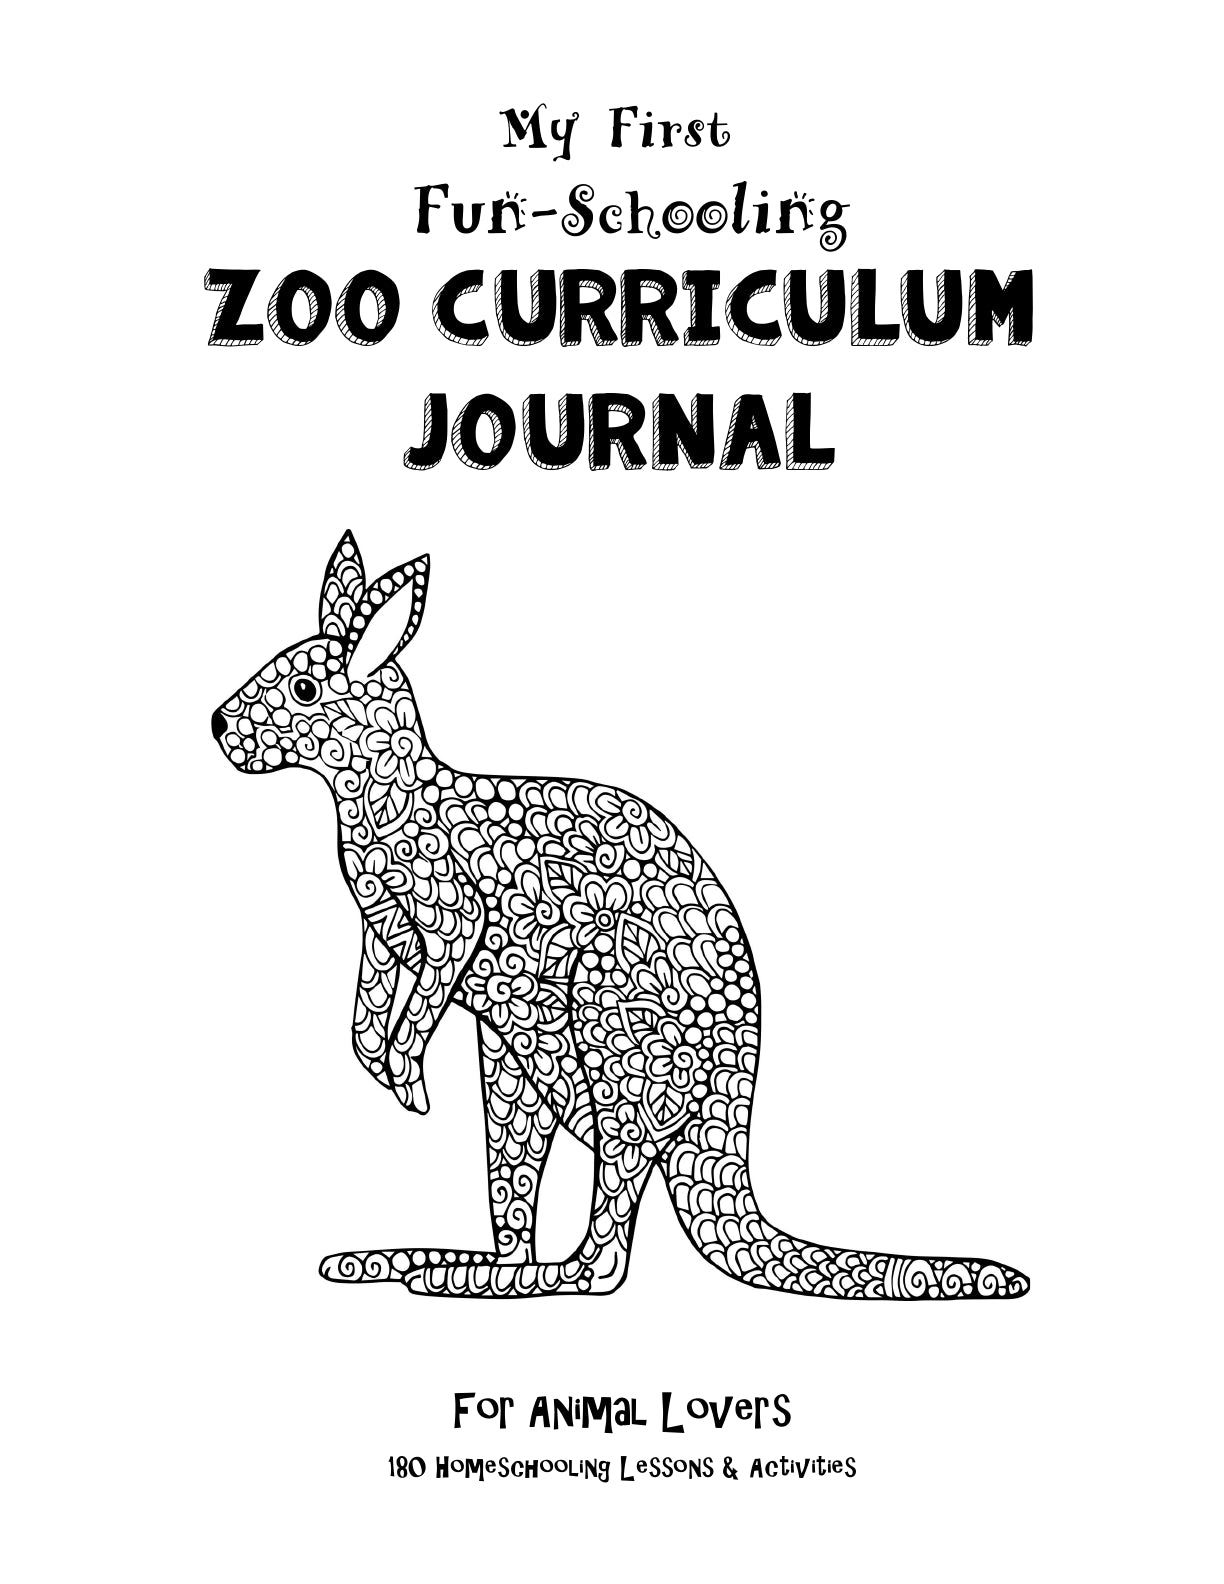 (Age 7+) My First Fun-Schooling ZOO Curriculum